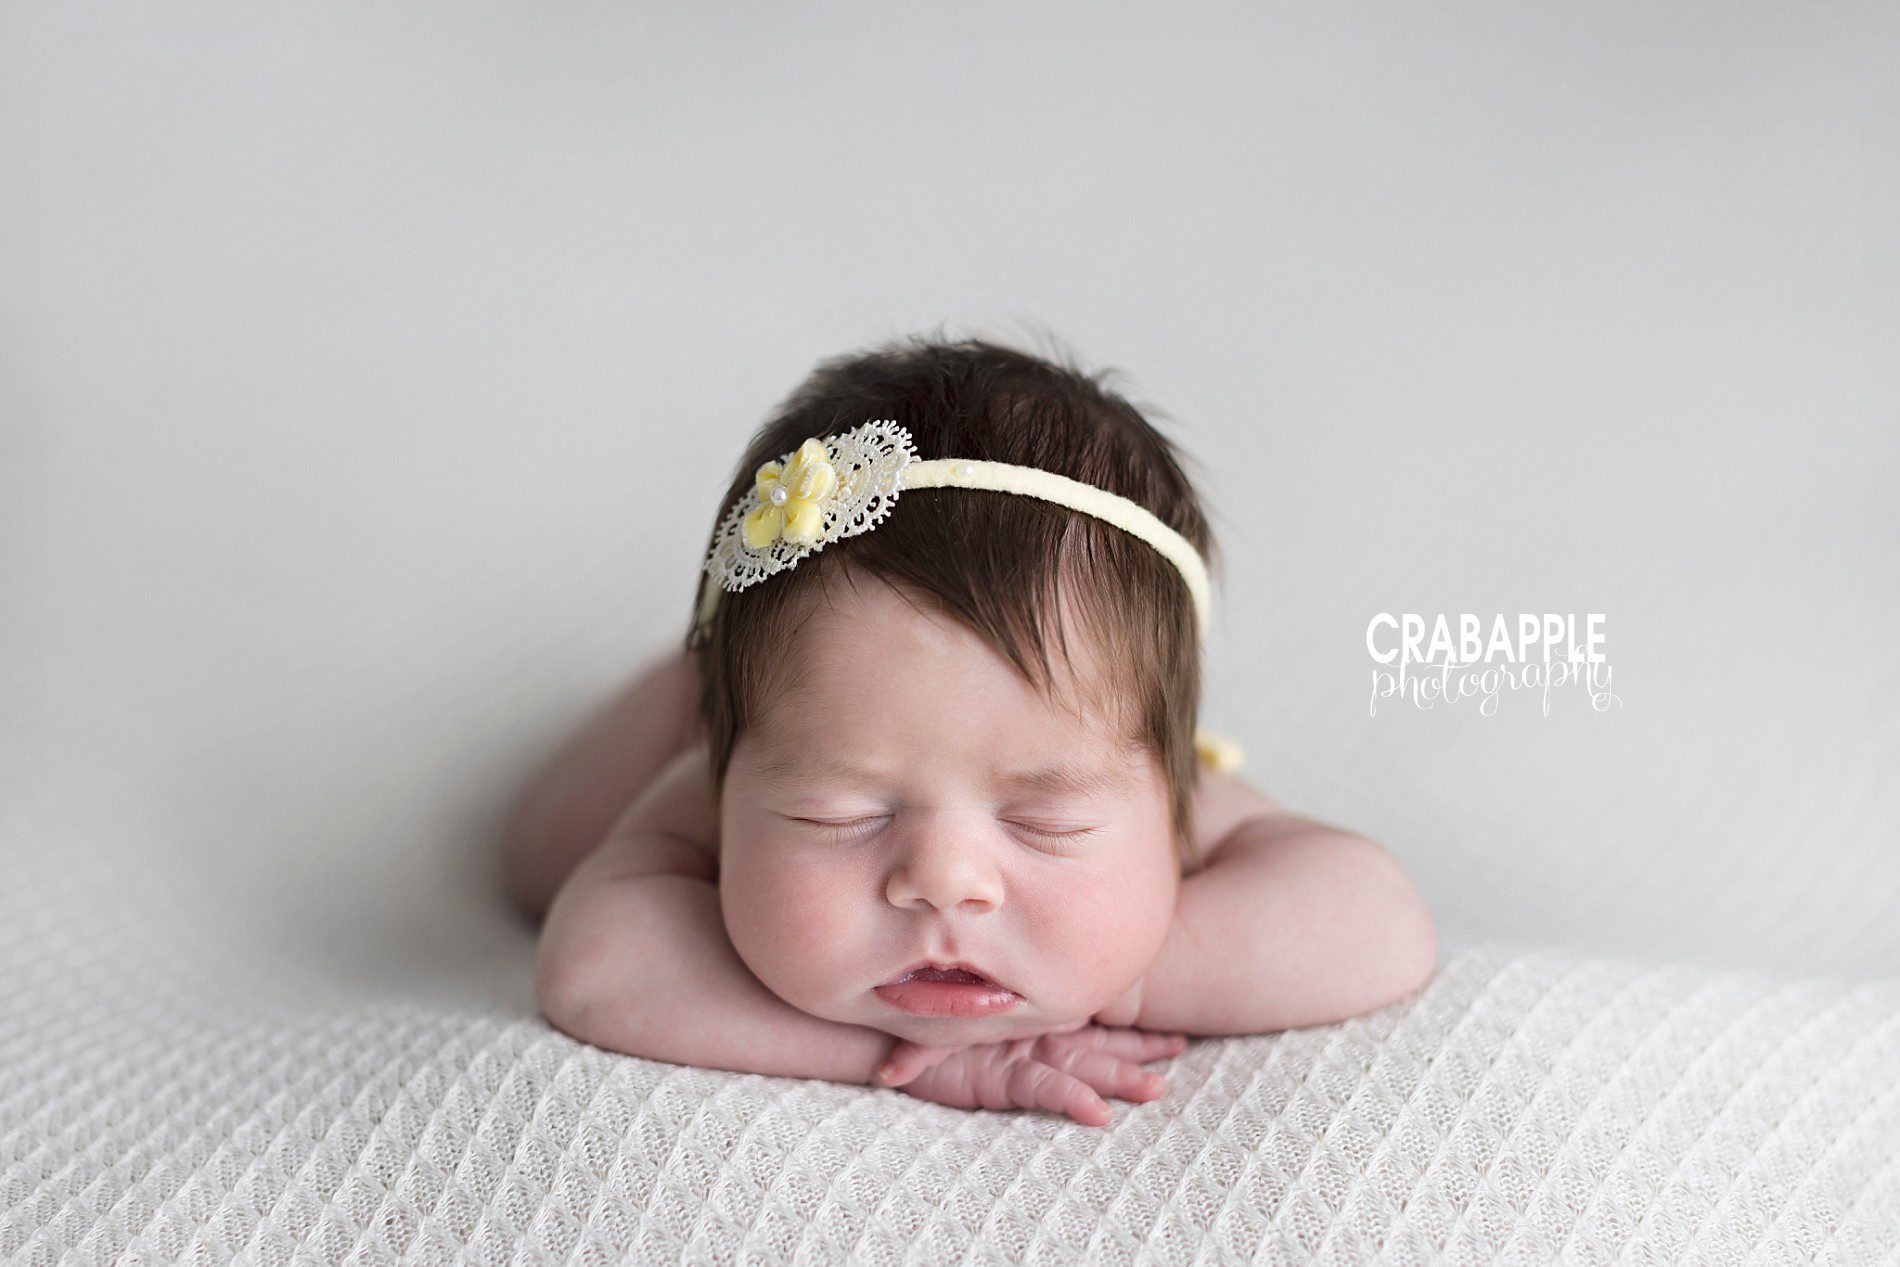 pose ideas for newborn baby portraits